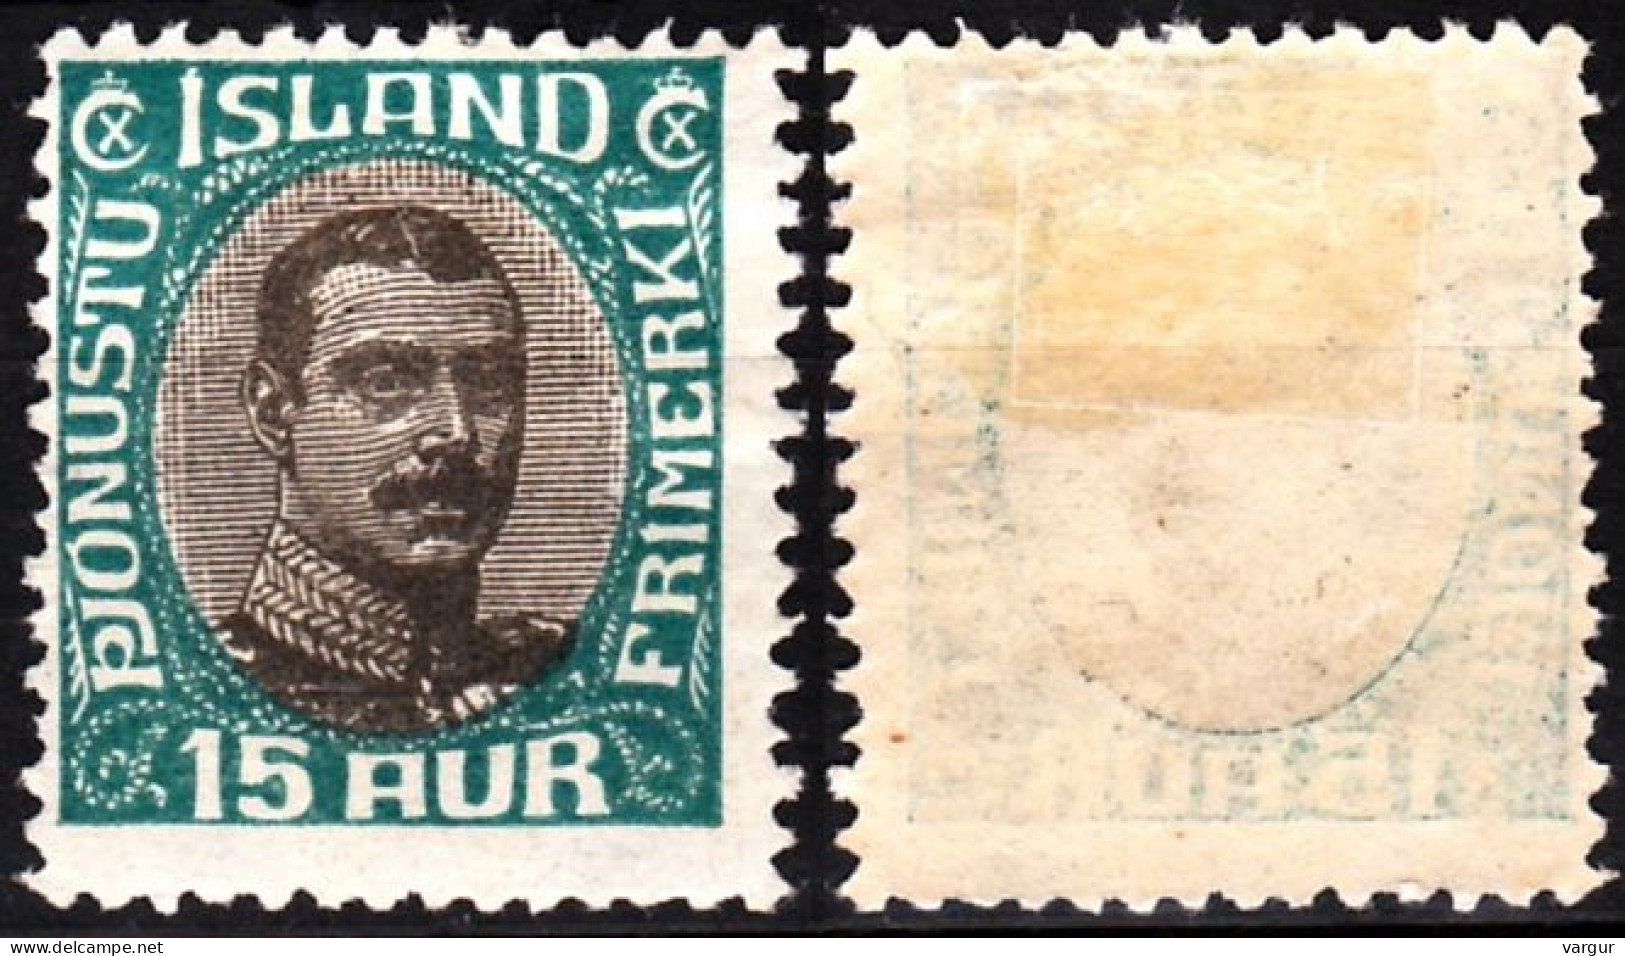 ICELAND / ISLAND Postage Due 1920 King Christian X, 15Aur, MH - Service